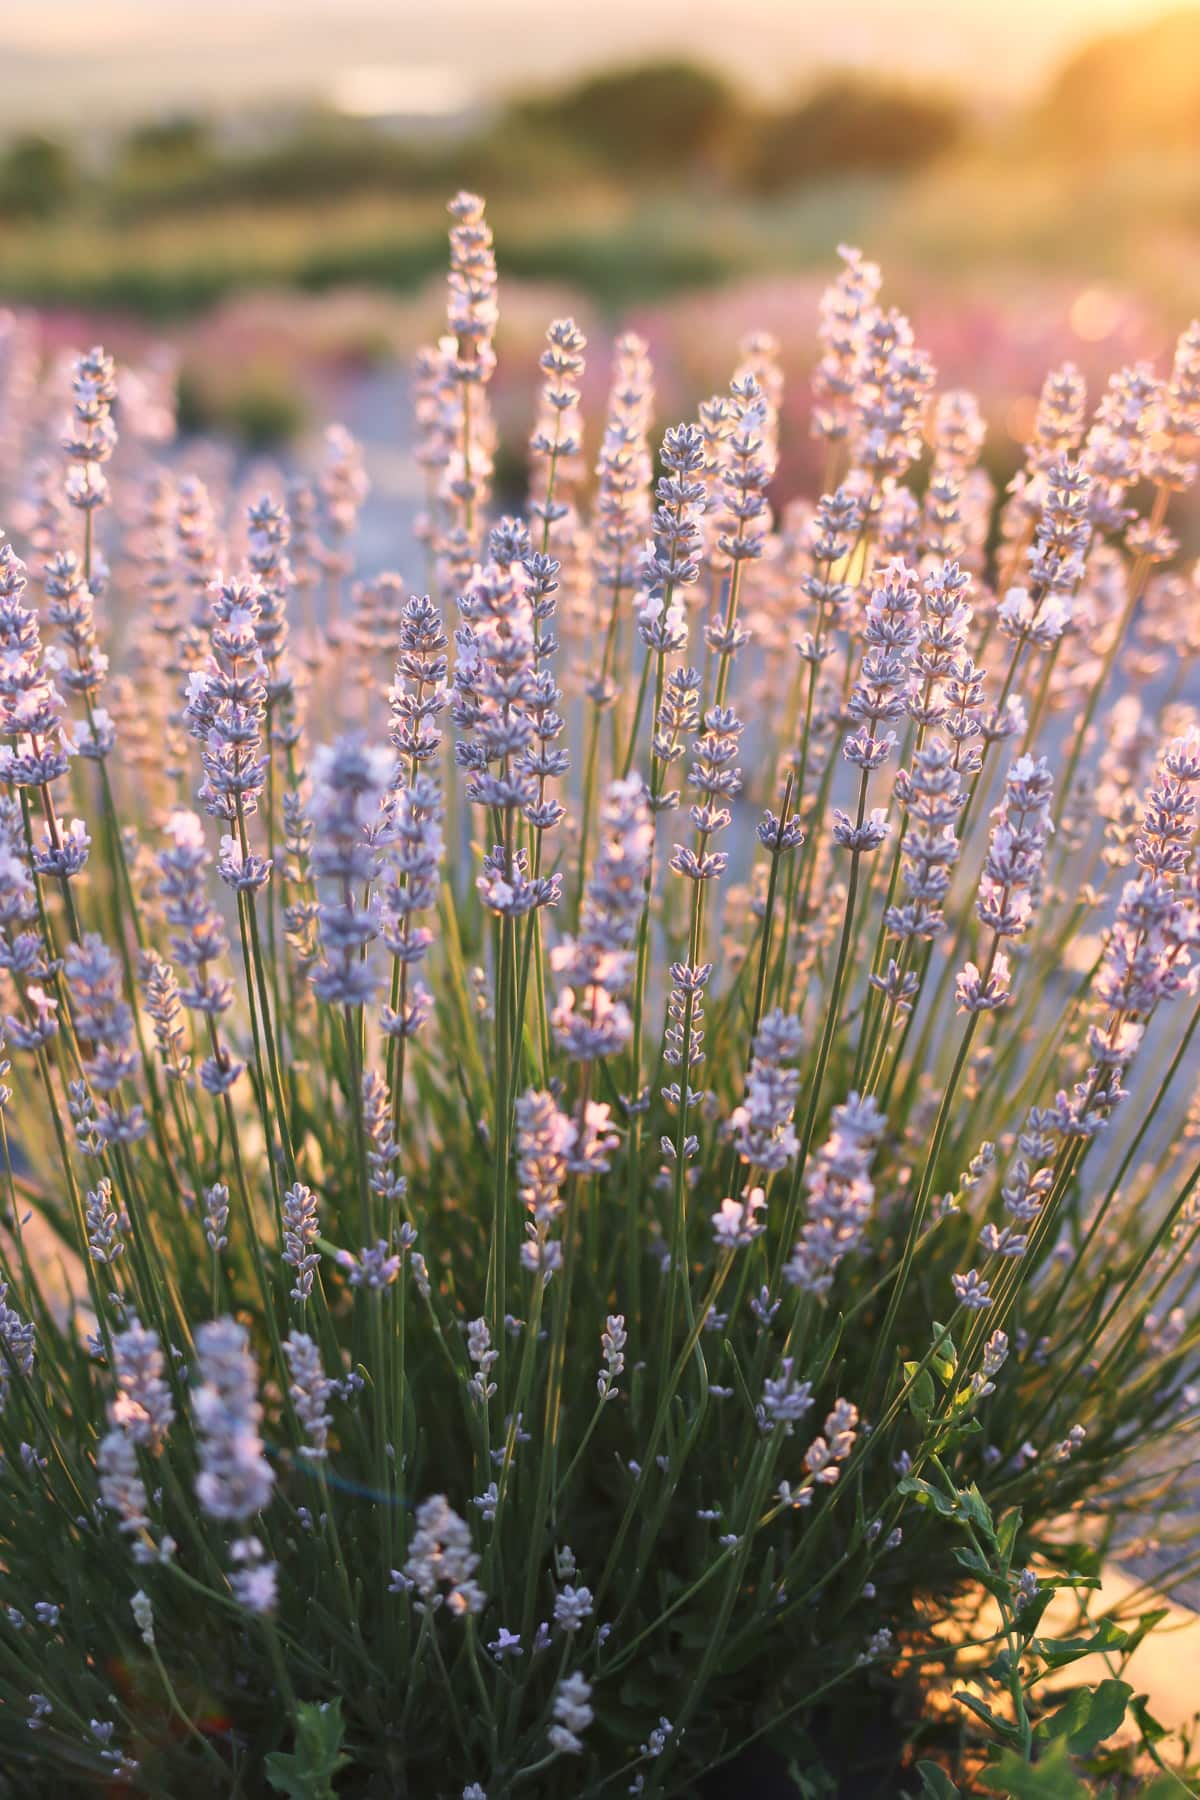 Close up of a lavender plant